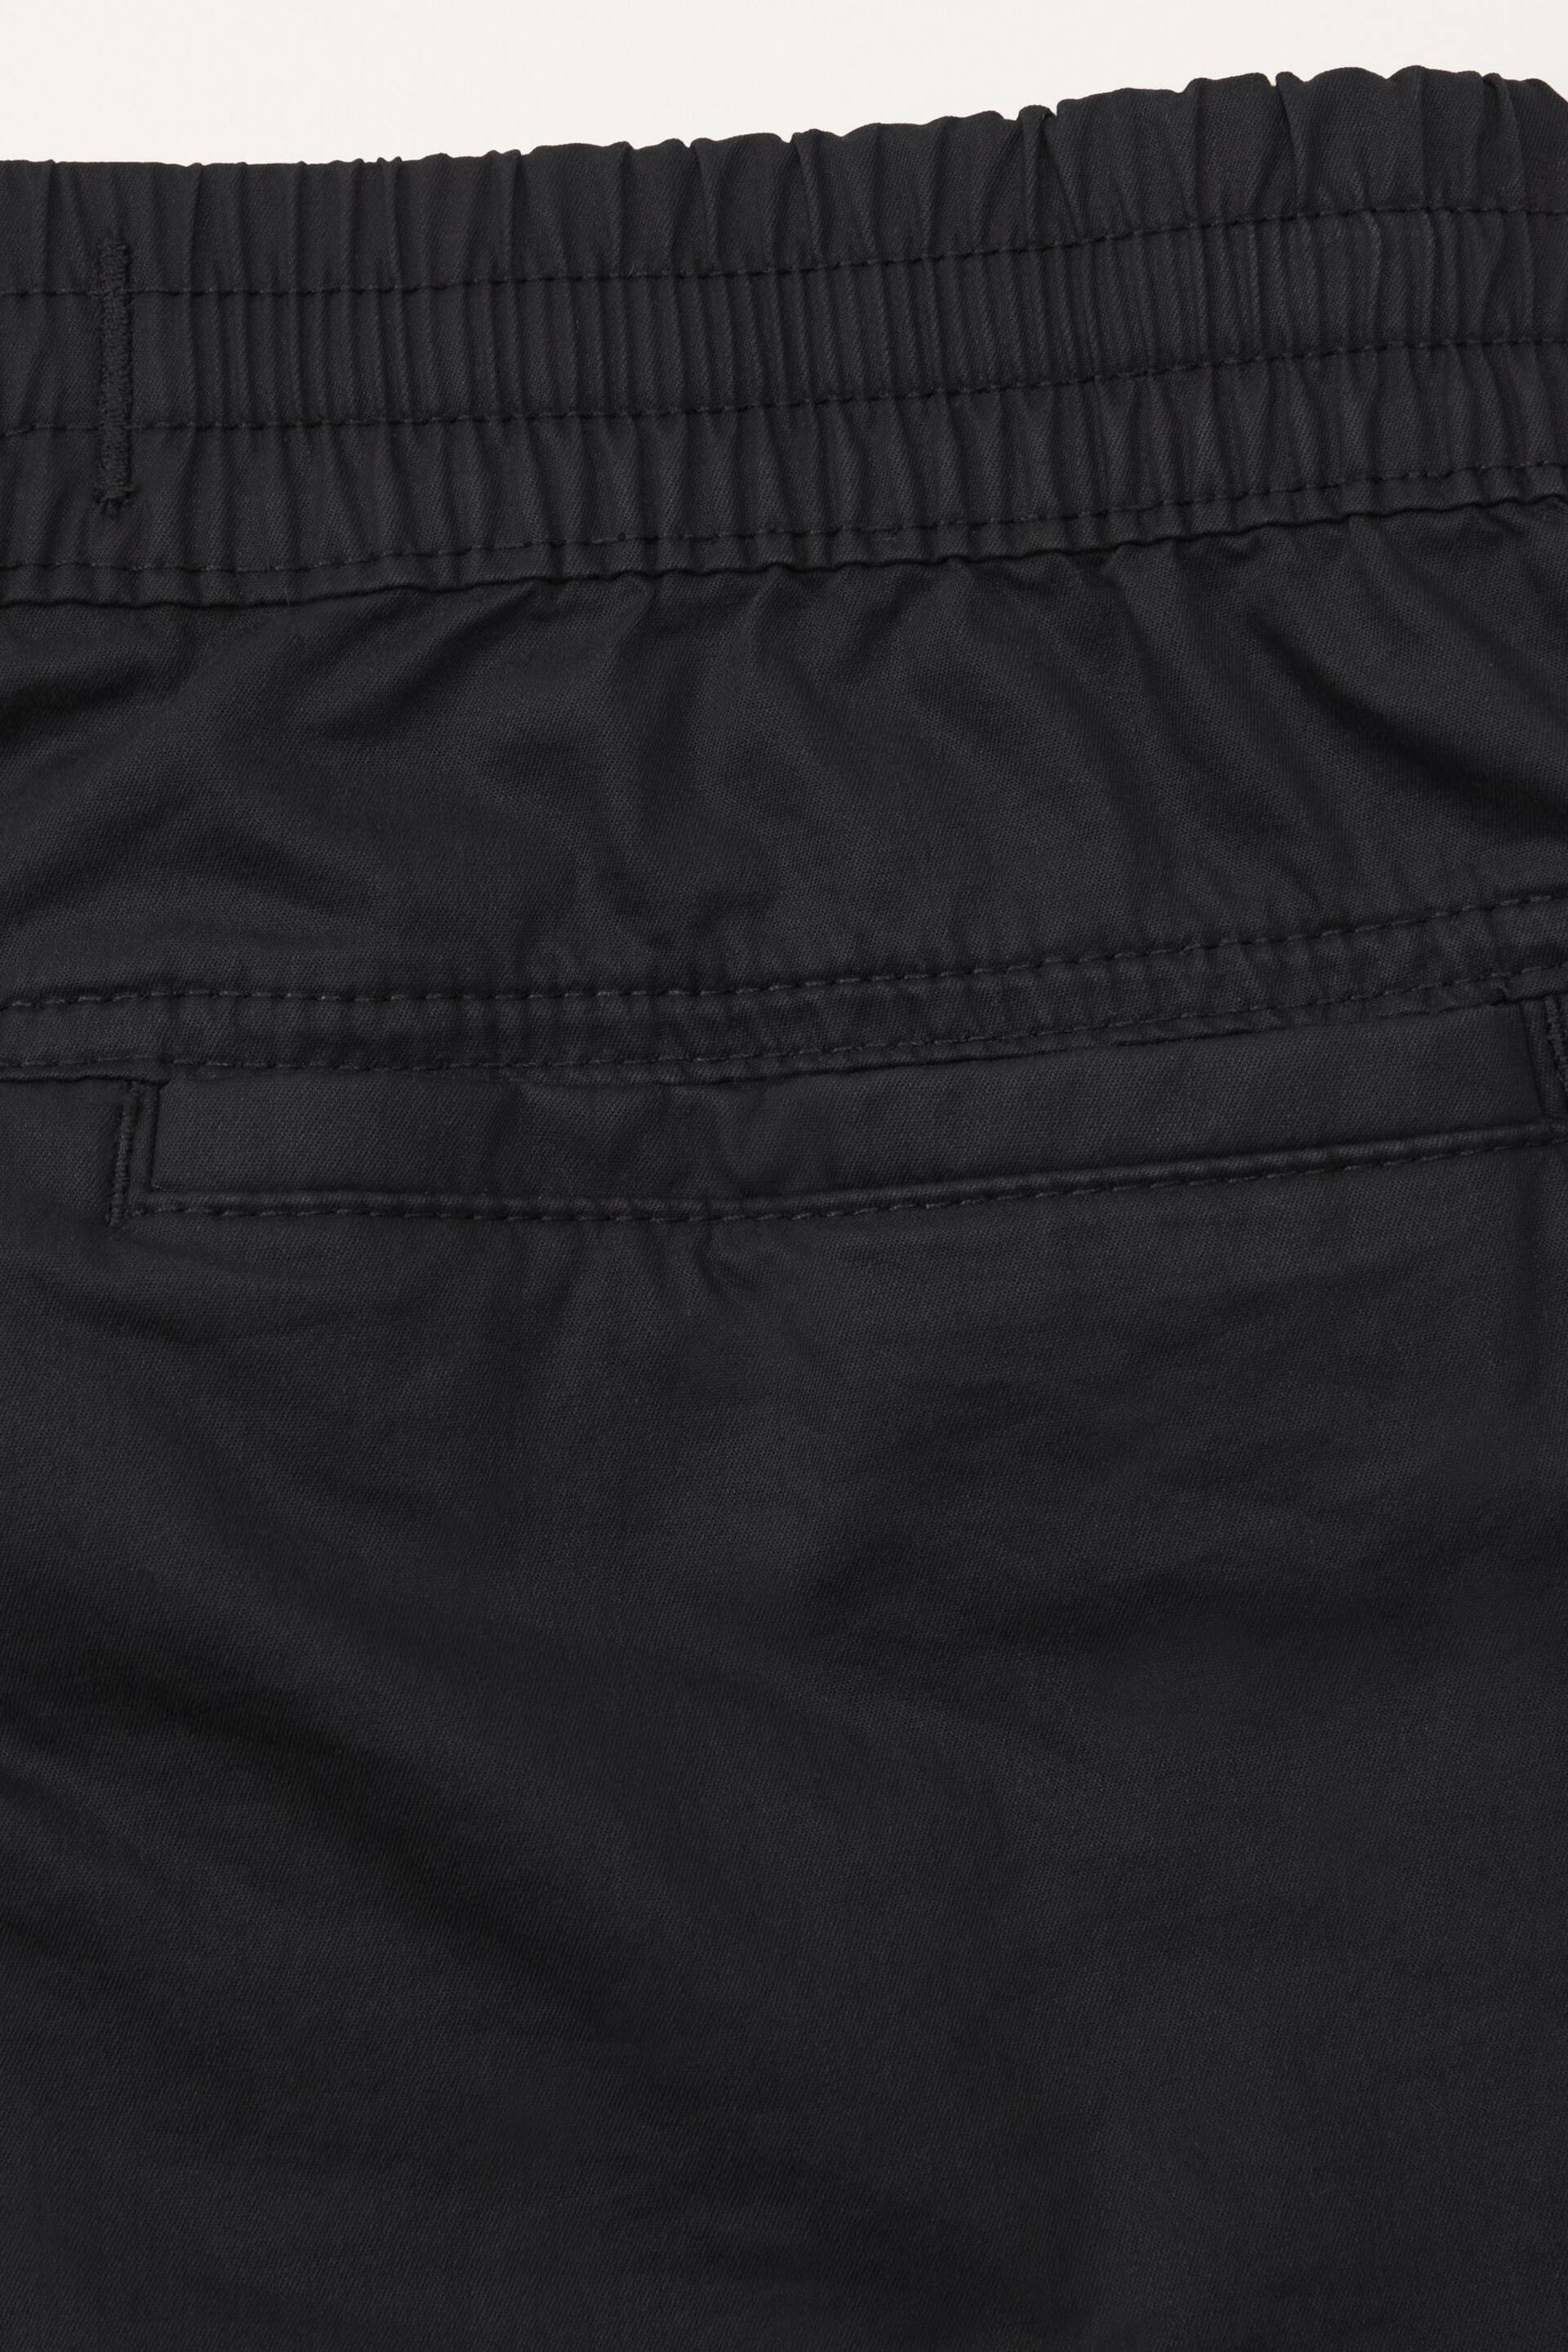 Abercrombie & Fitch Cargo Utility Black Shorts - Image 2 of 2